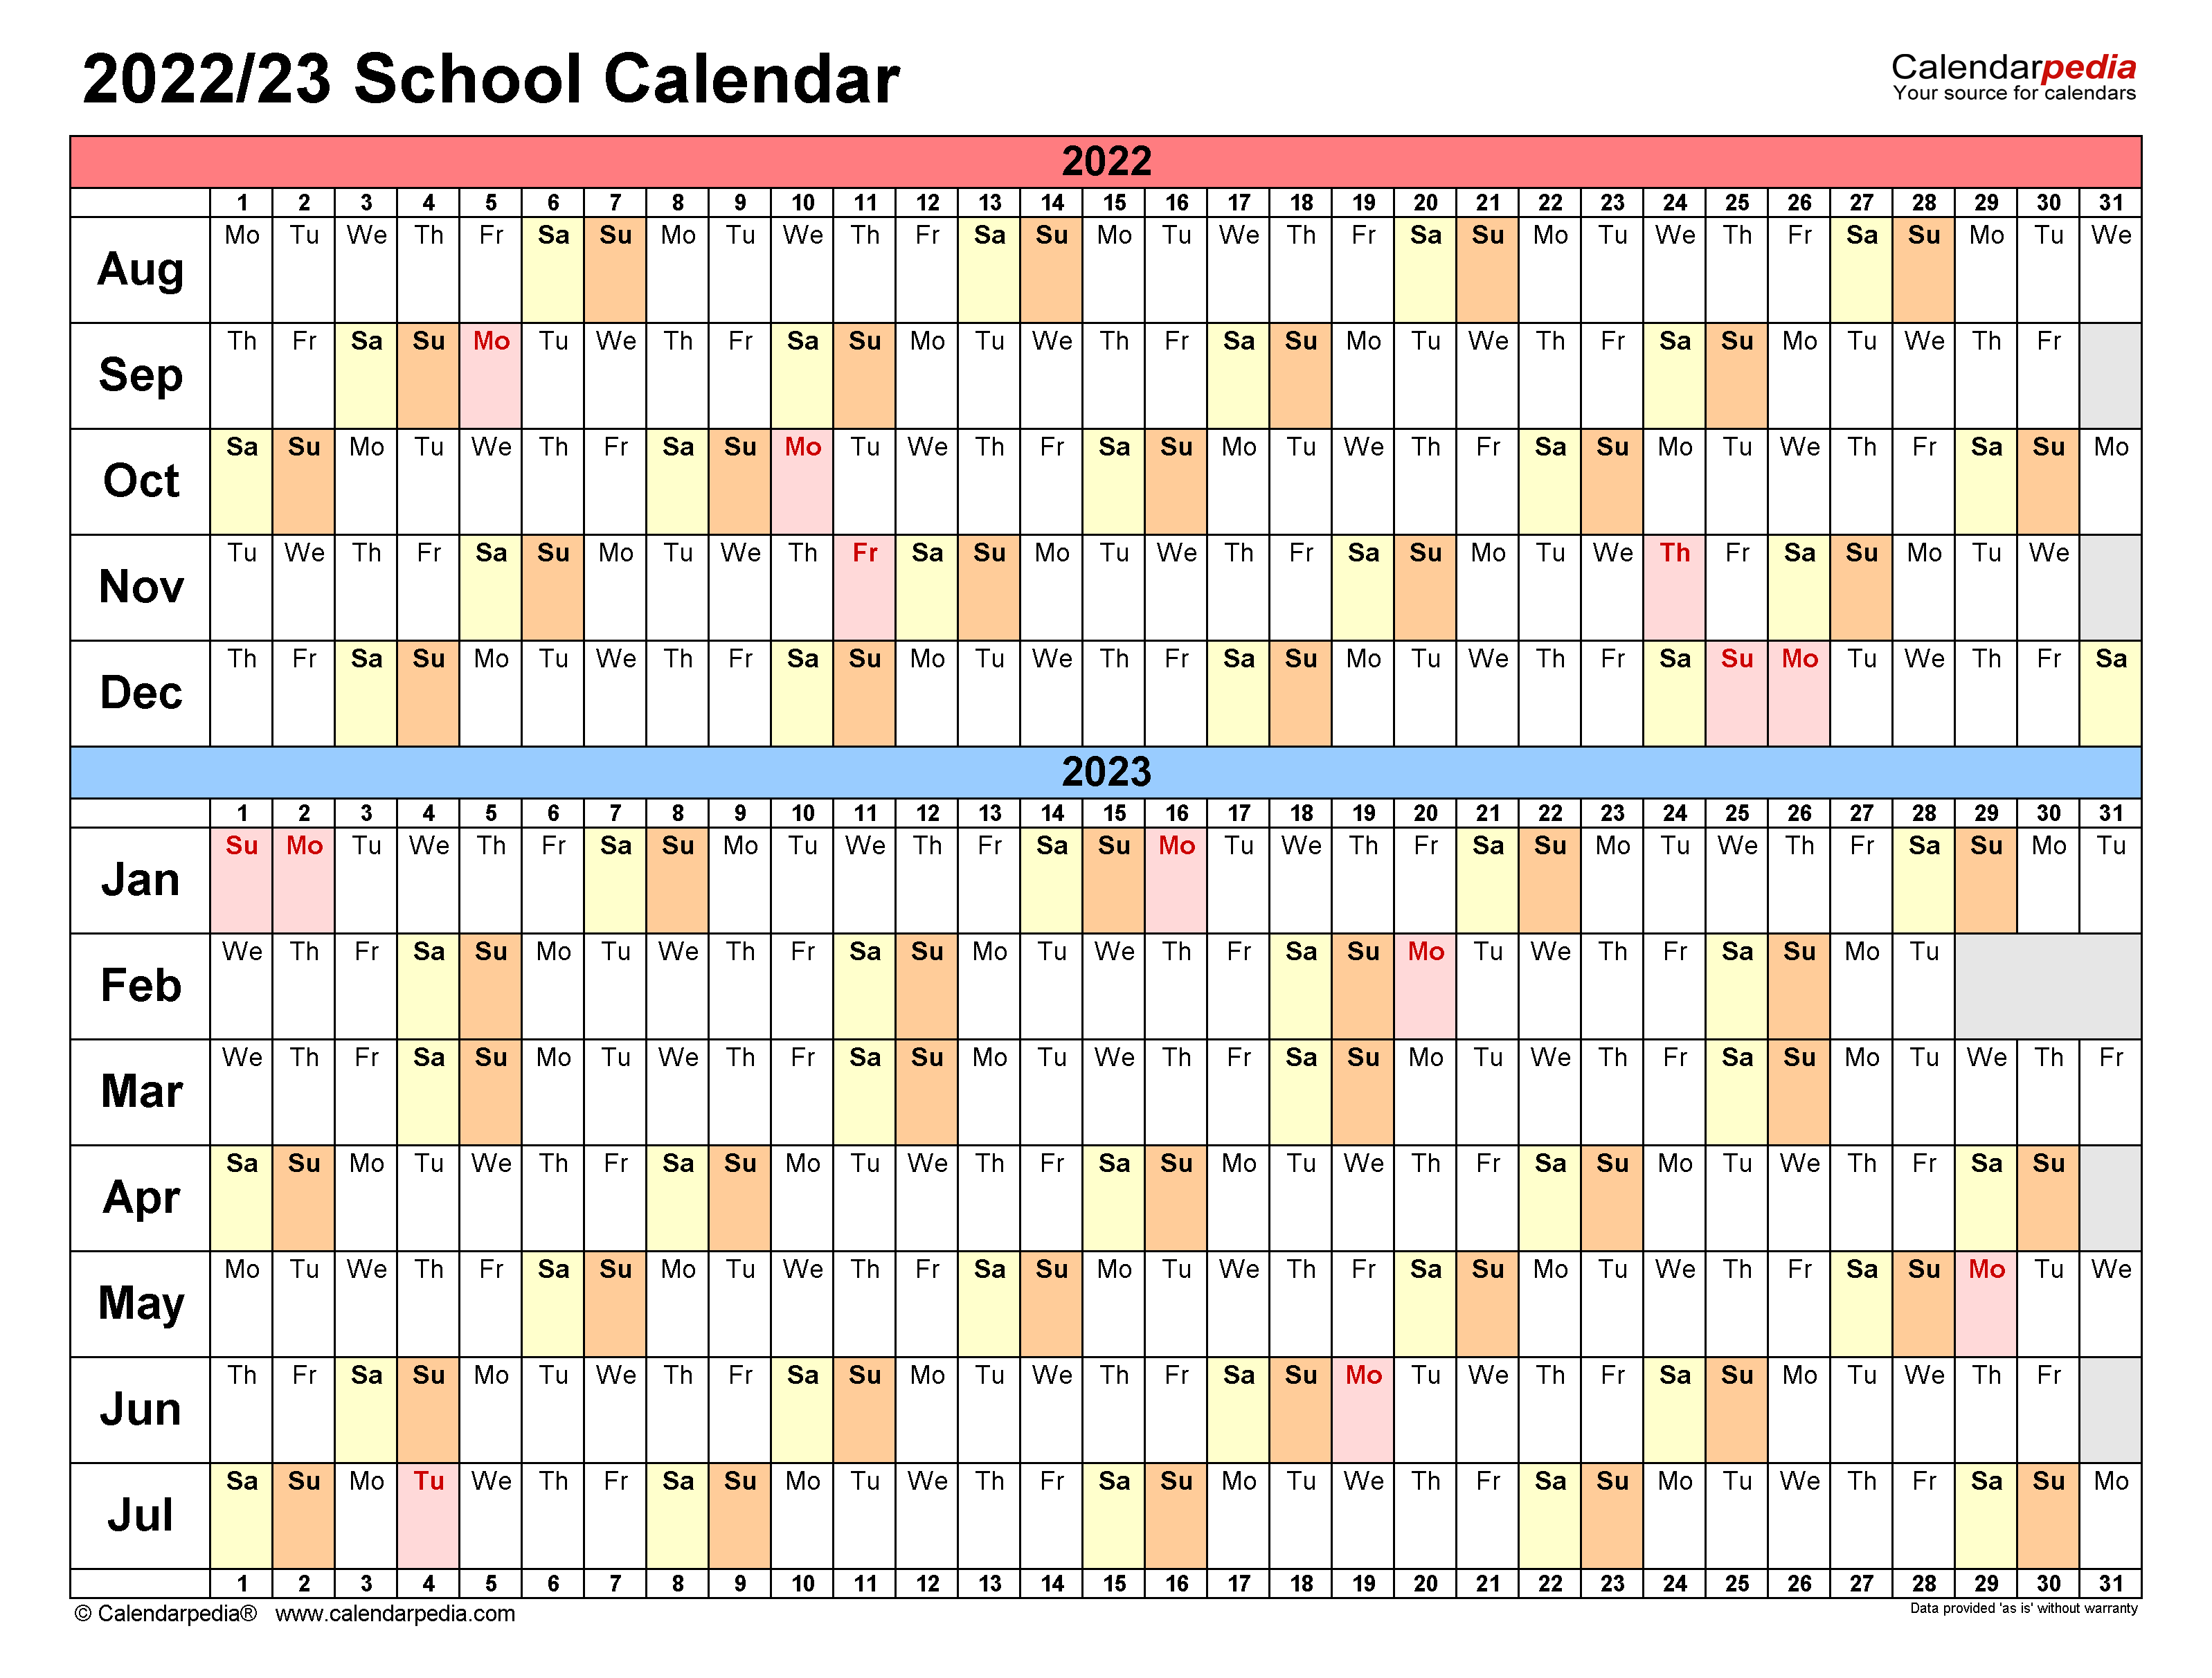 Seattle Public Schools Calendar 2022-22 2022 - Schoolcalendars.net